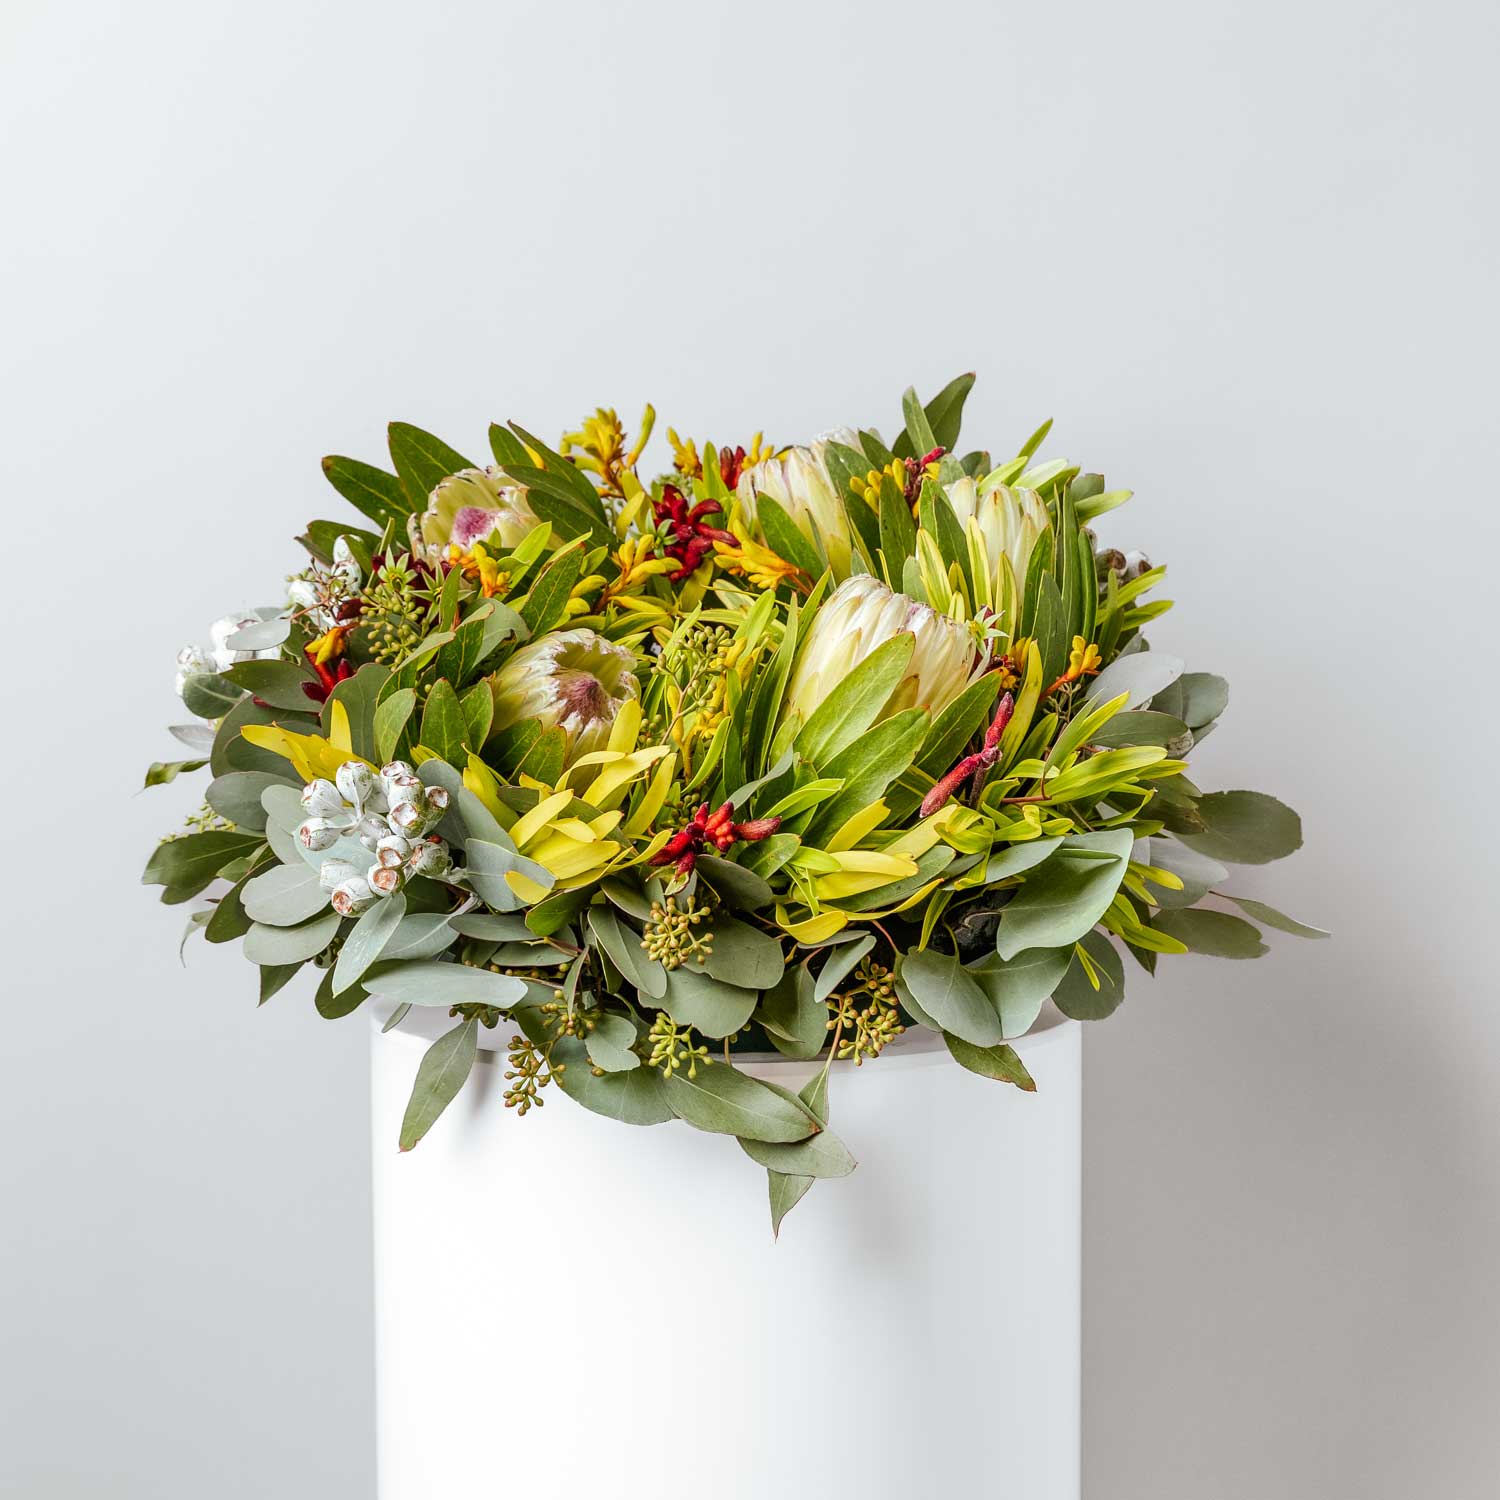 funeral wreath made with seasonal native flowers including protea kangaroo paw leucadendron gumnuts and foliage created into a circular shape